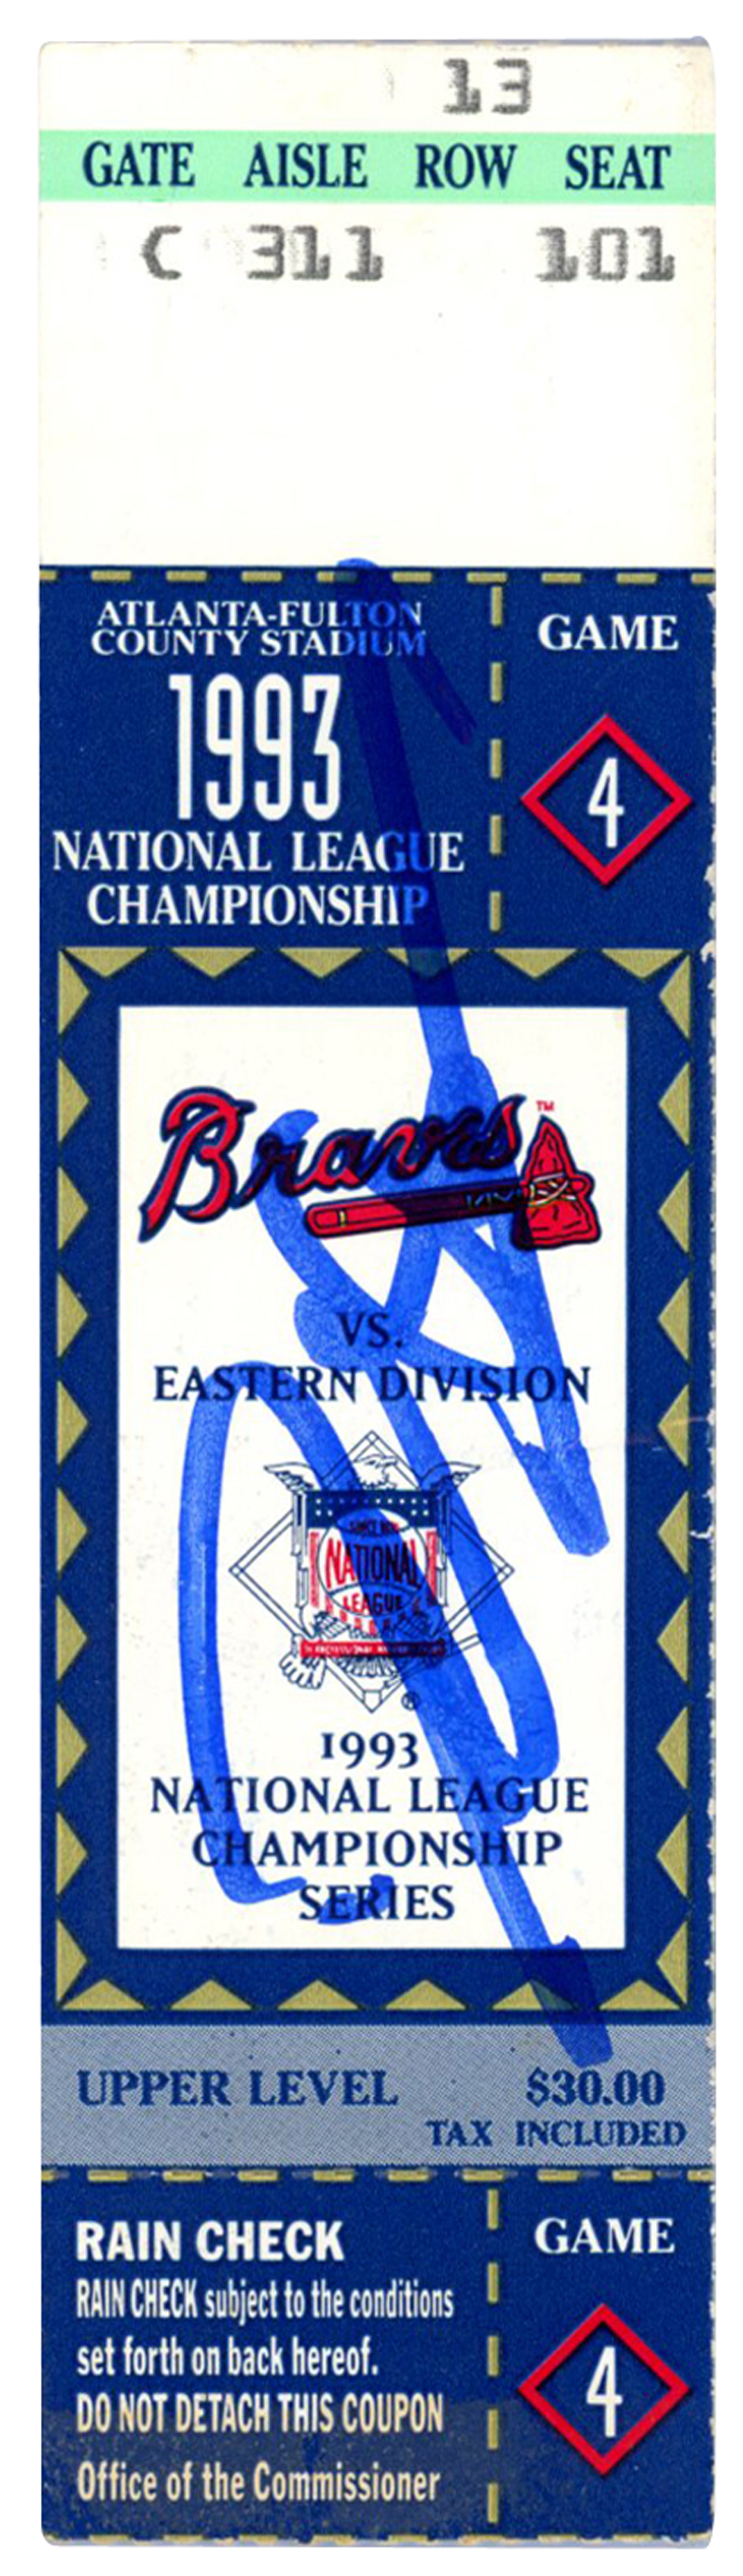 Deion Sanders Autographed Atlanta Braves 1993 NLCS Game 4 Ticket BAS